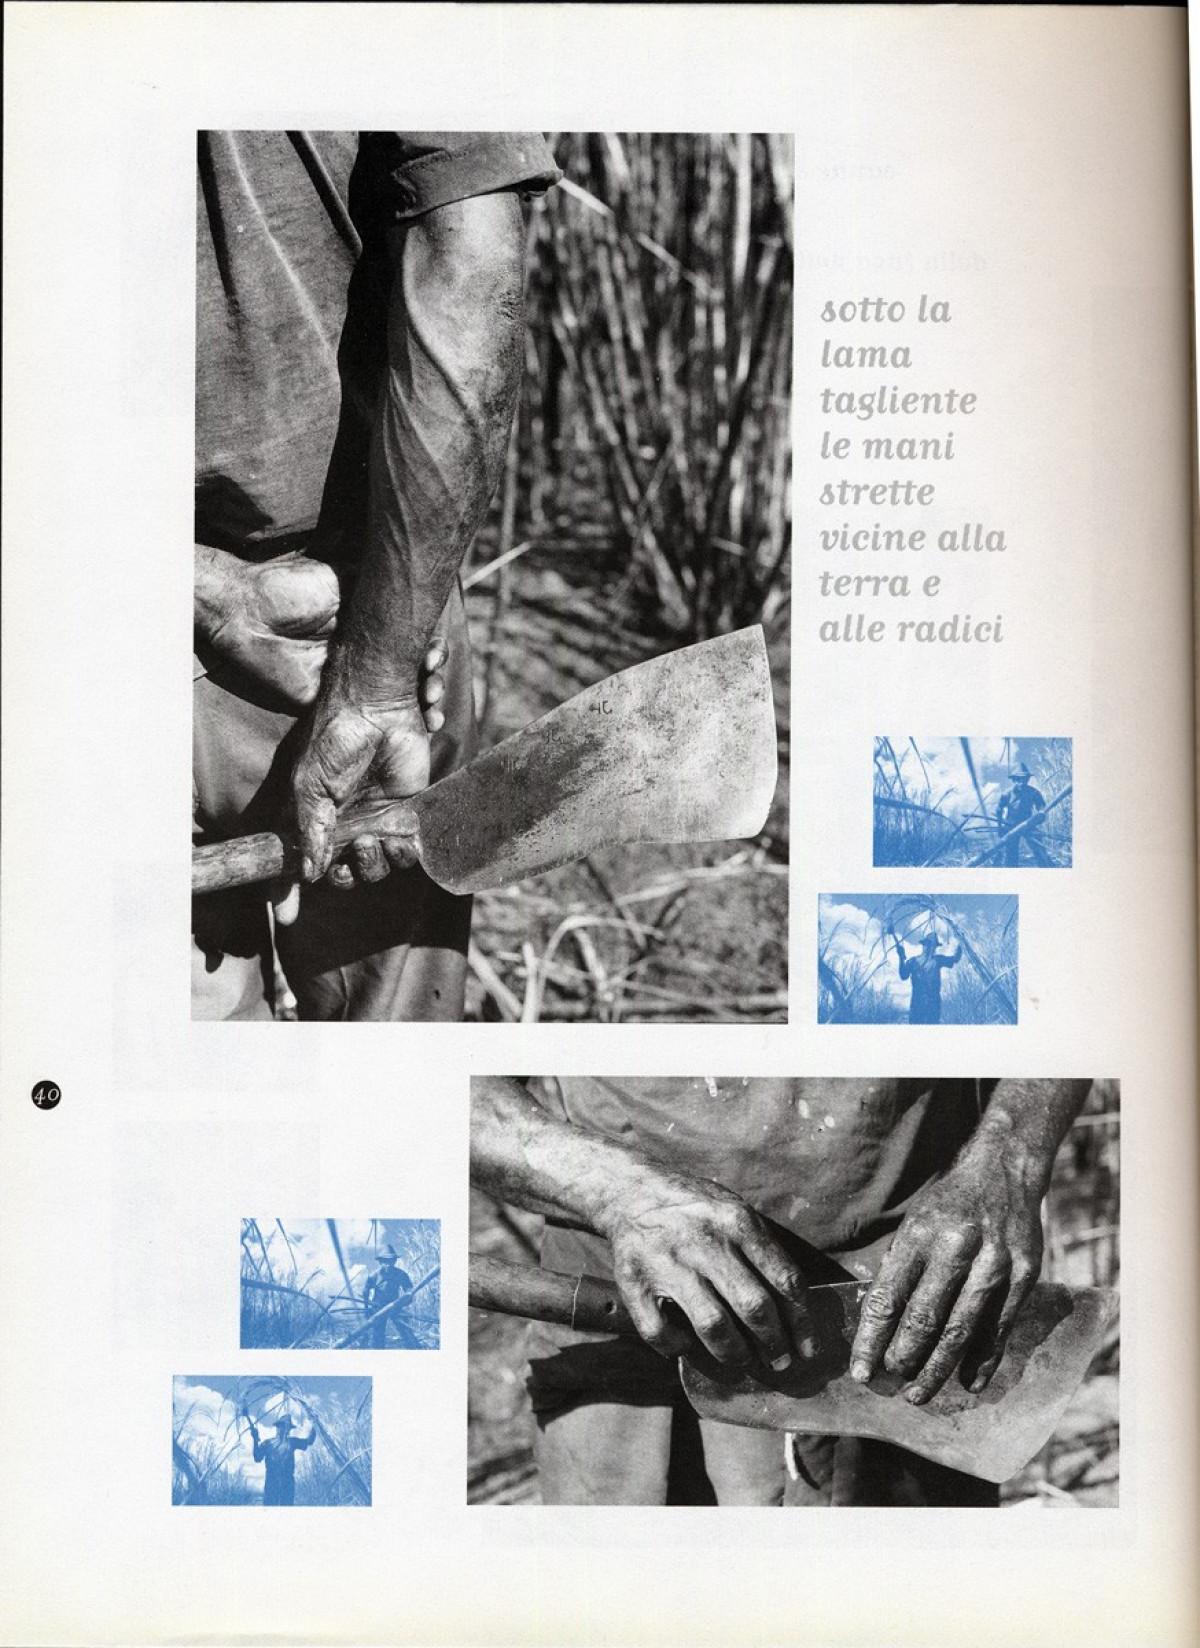 1997 - Sugarcane cutters - Linea d'ombra